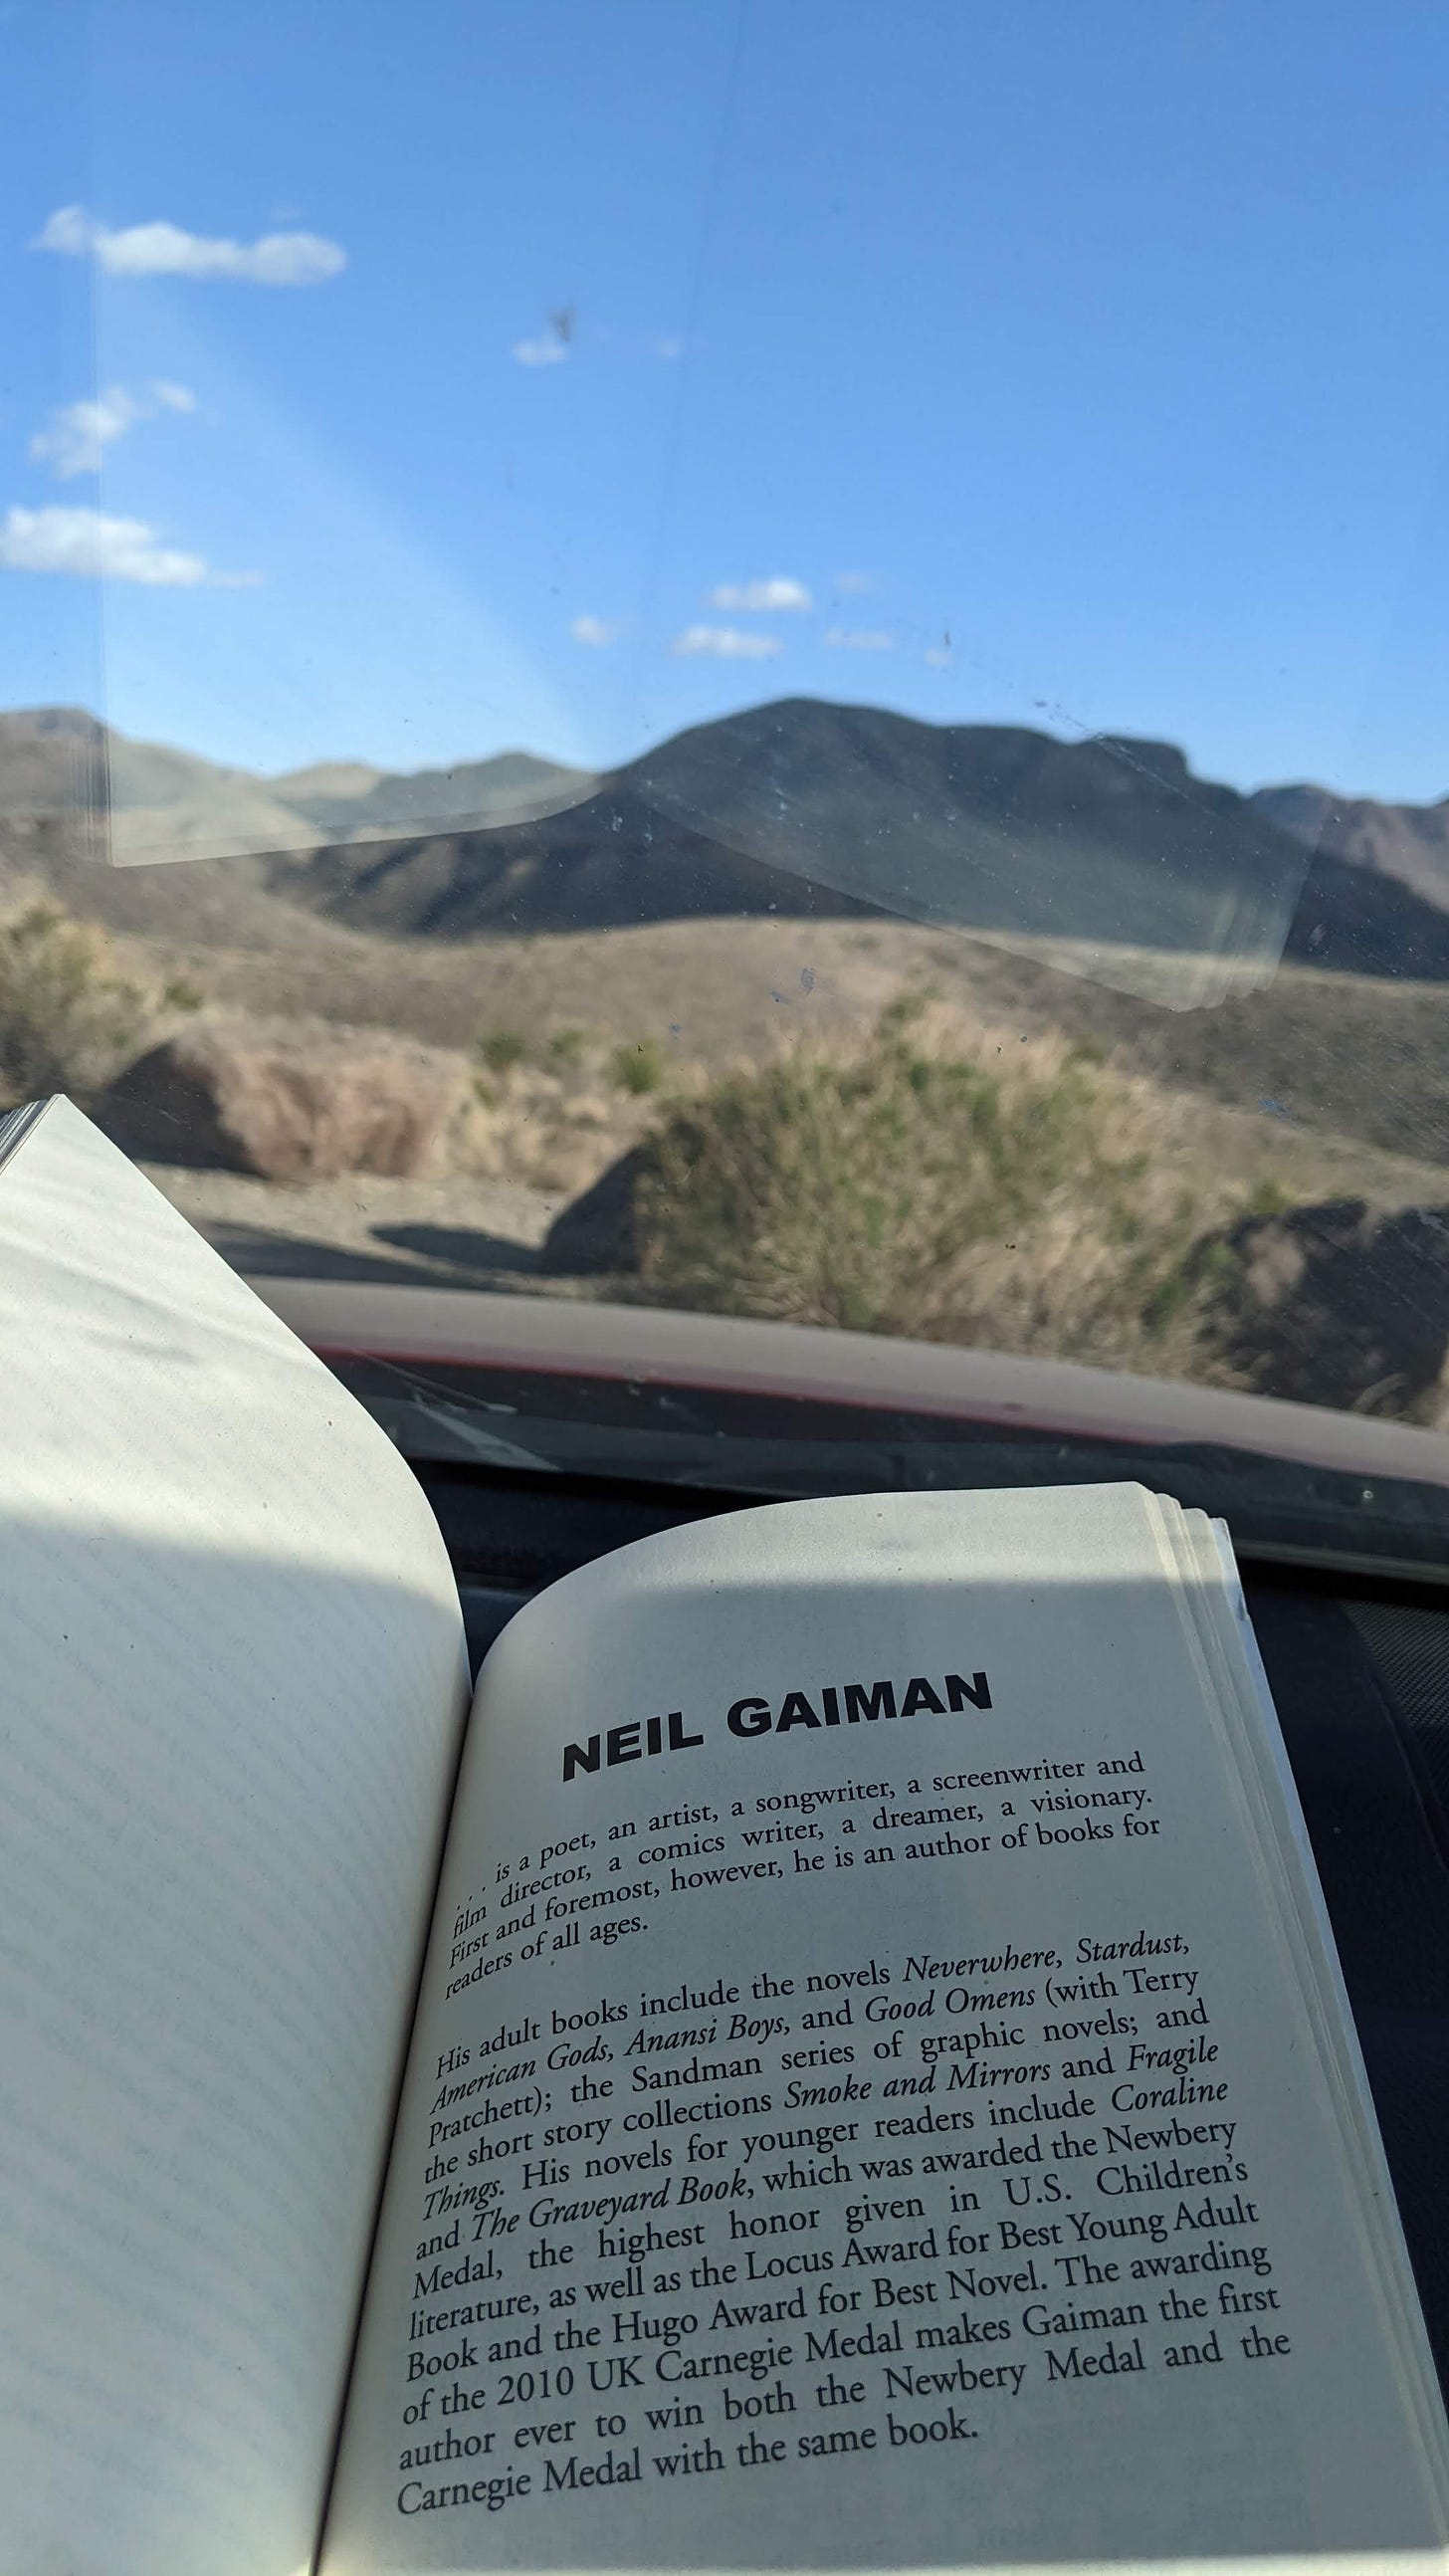 Book with Neil Gaimon's blurb, next to a landscape